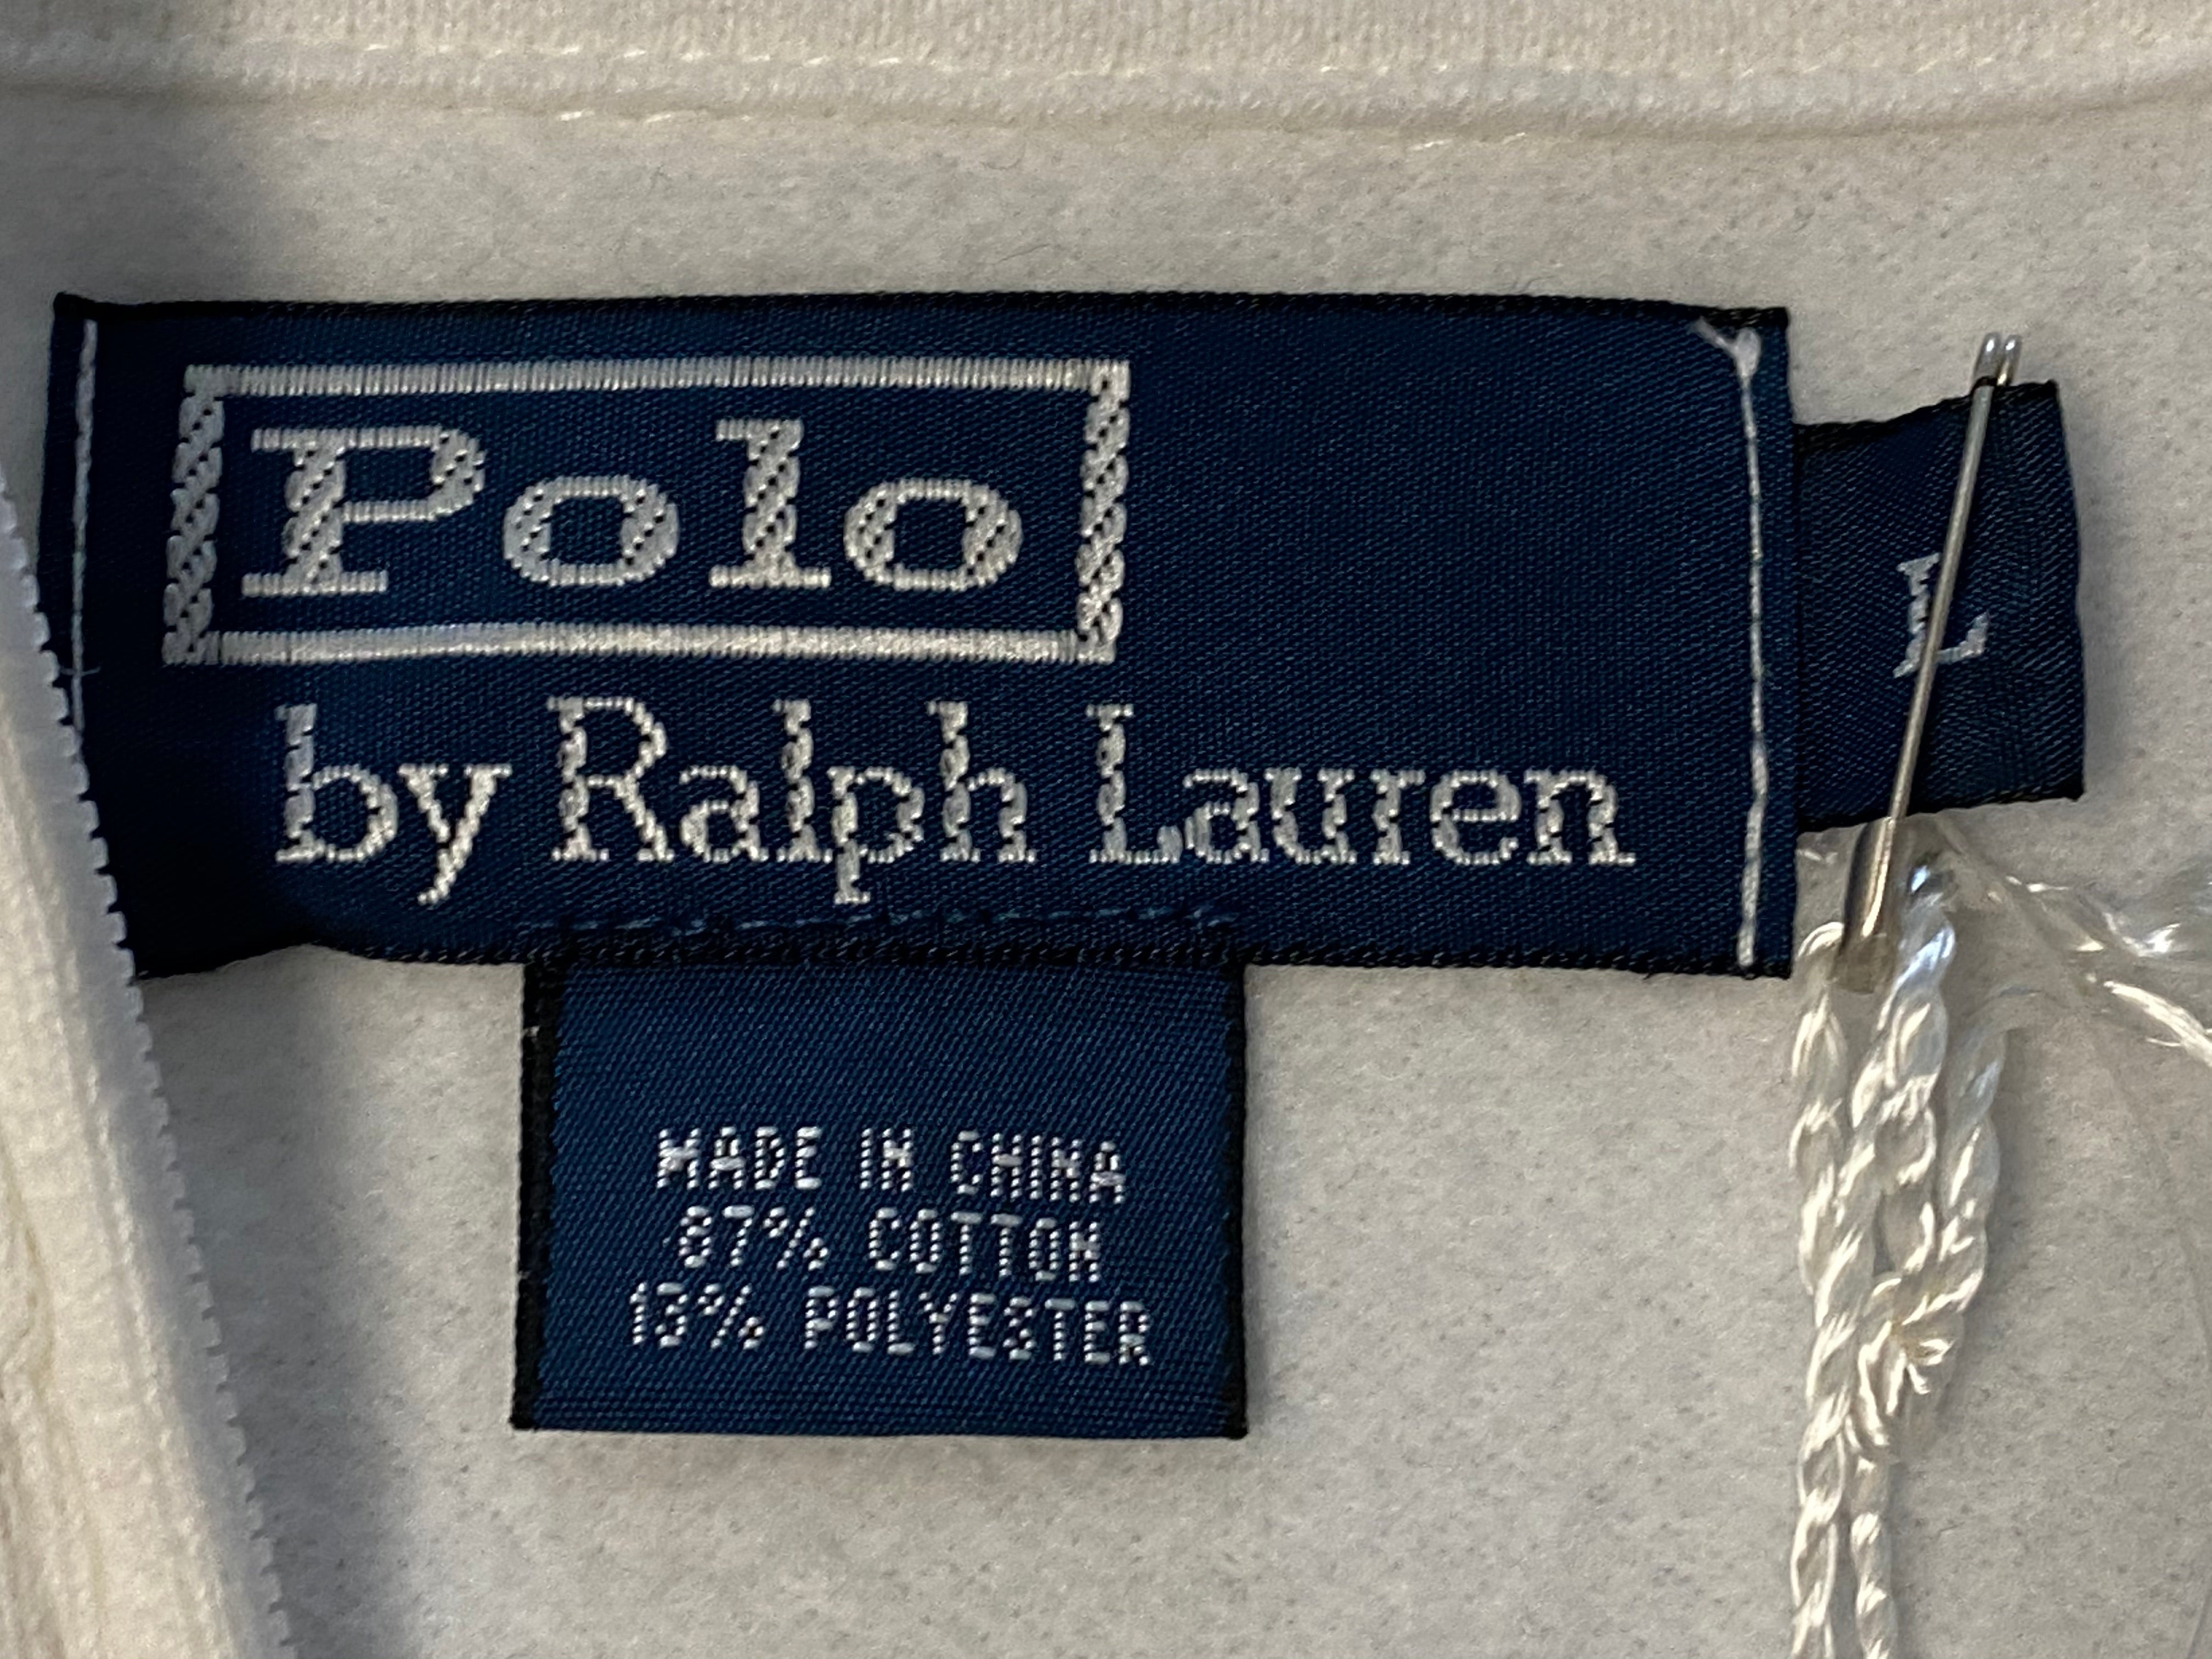 Polo Ralph Lauren Zip Neck Fleece Pullover - White